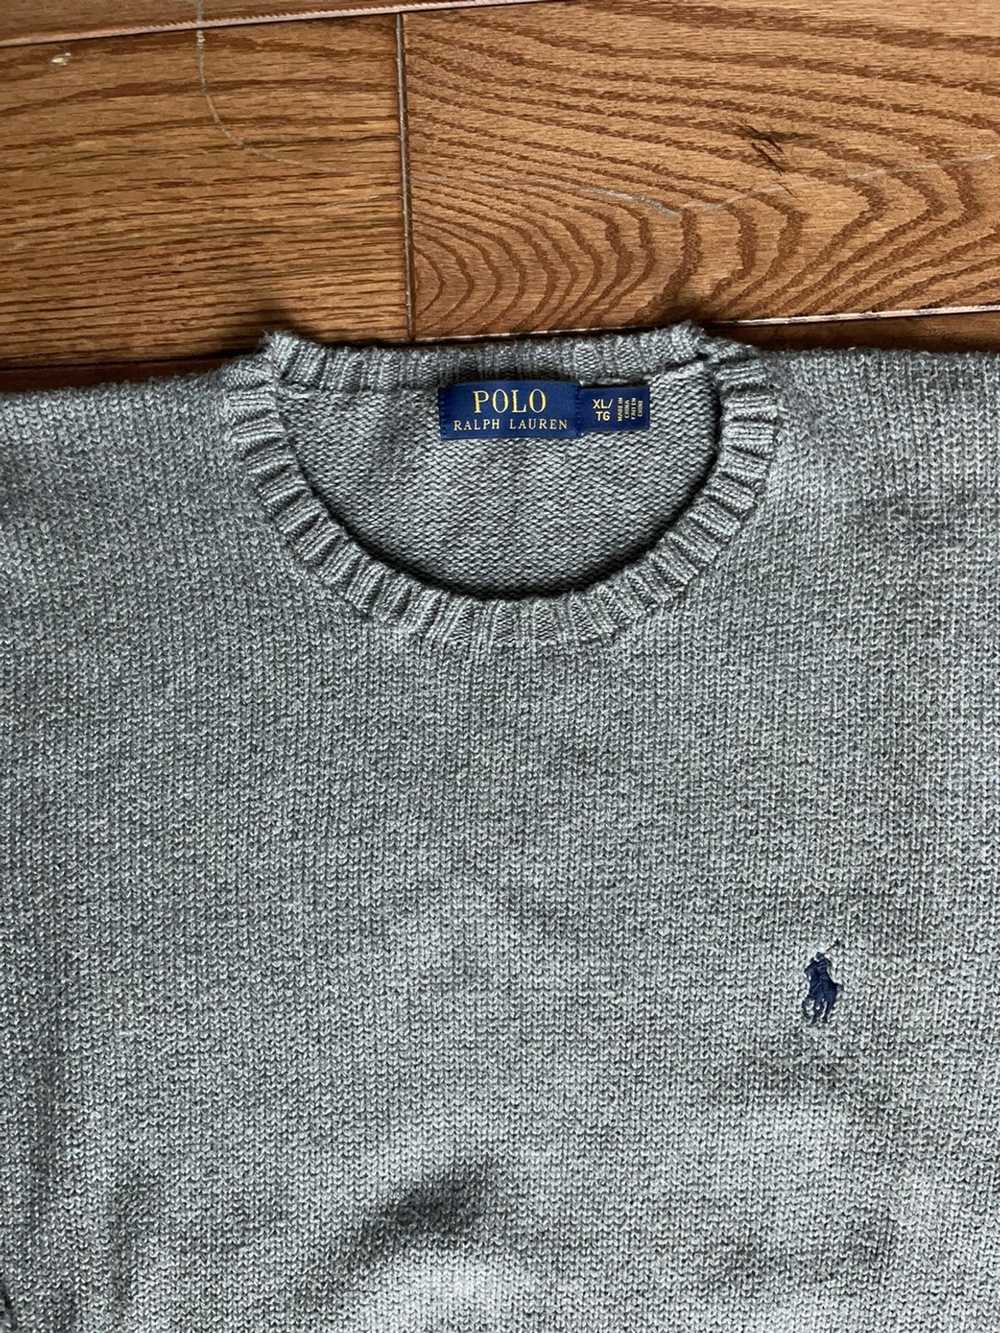 Polo Ralph Lauren Polo Ralph Lauren Sweater - image 1